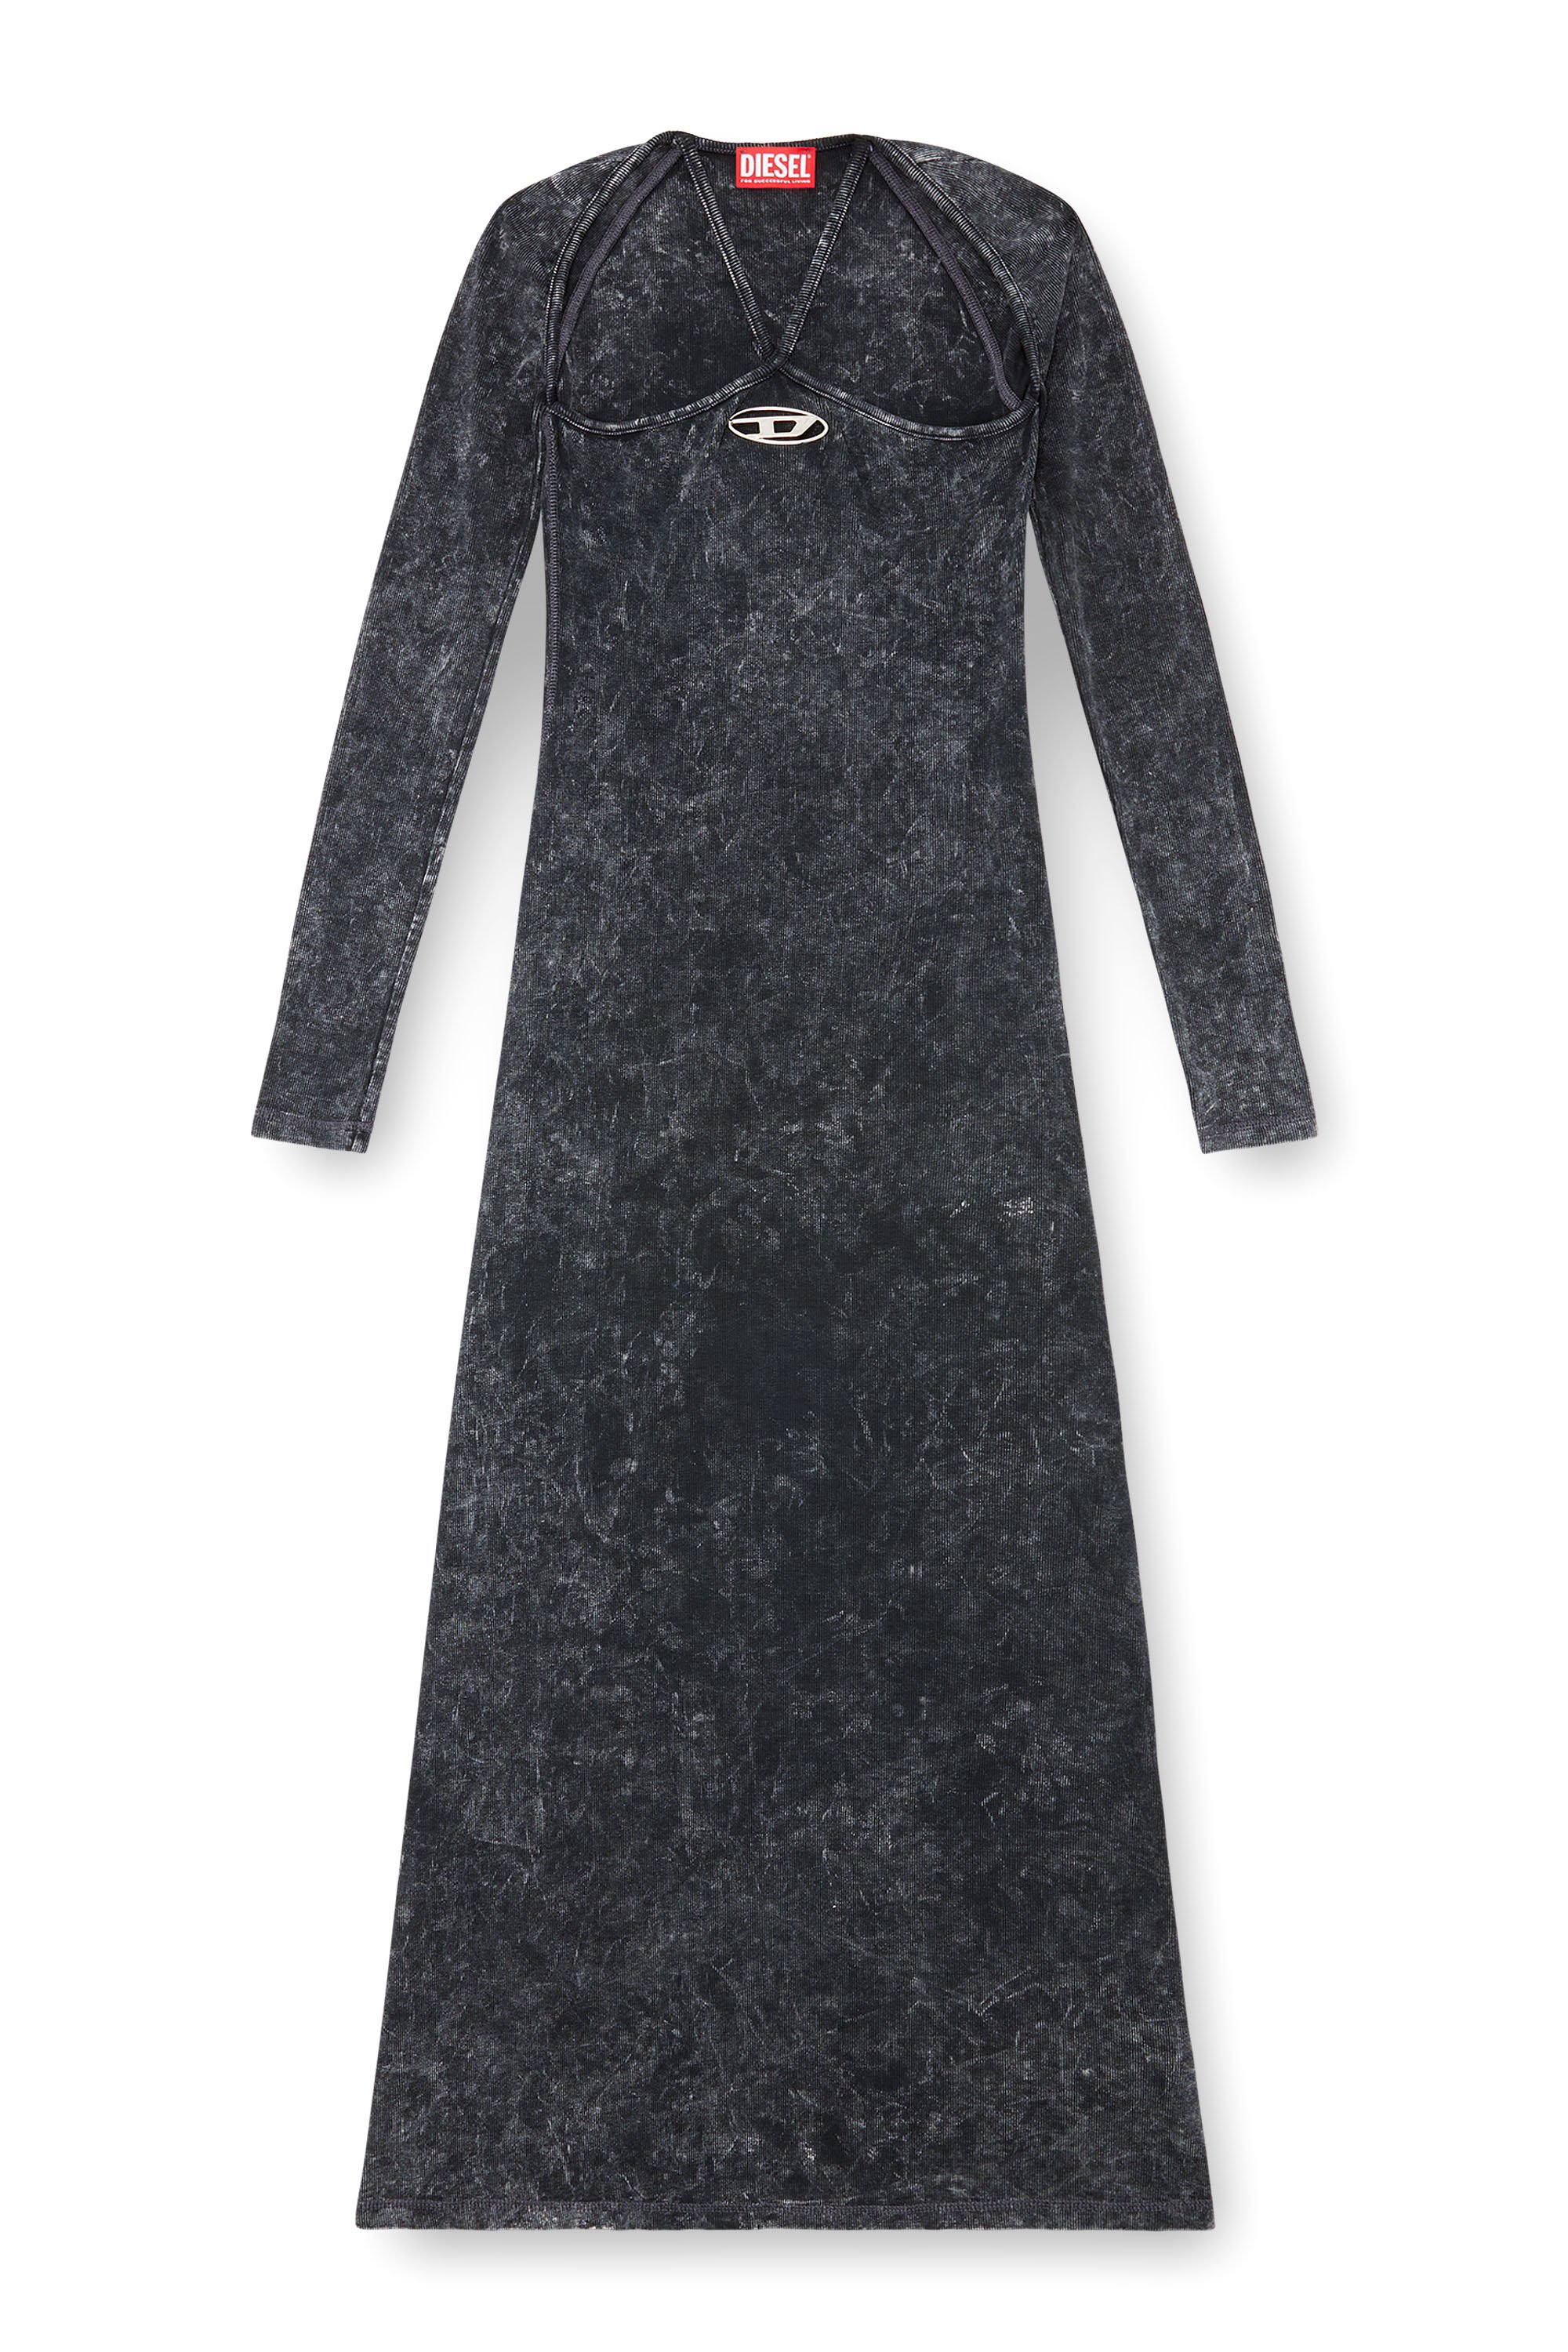 Diesel - D-MARINEL, Damen Langes Kleid in marmorierter Optik in Schwarz - Image 1